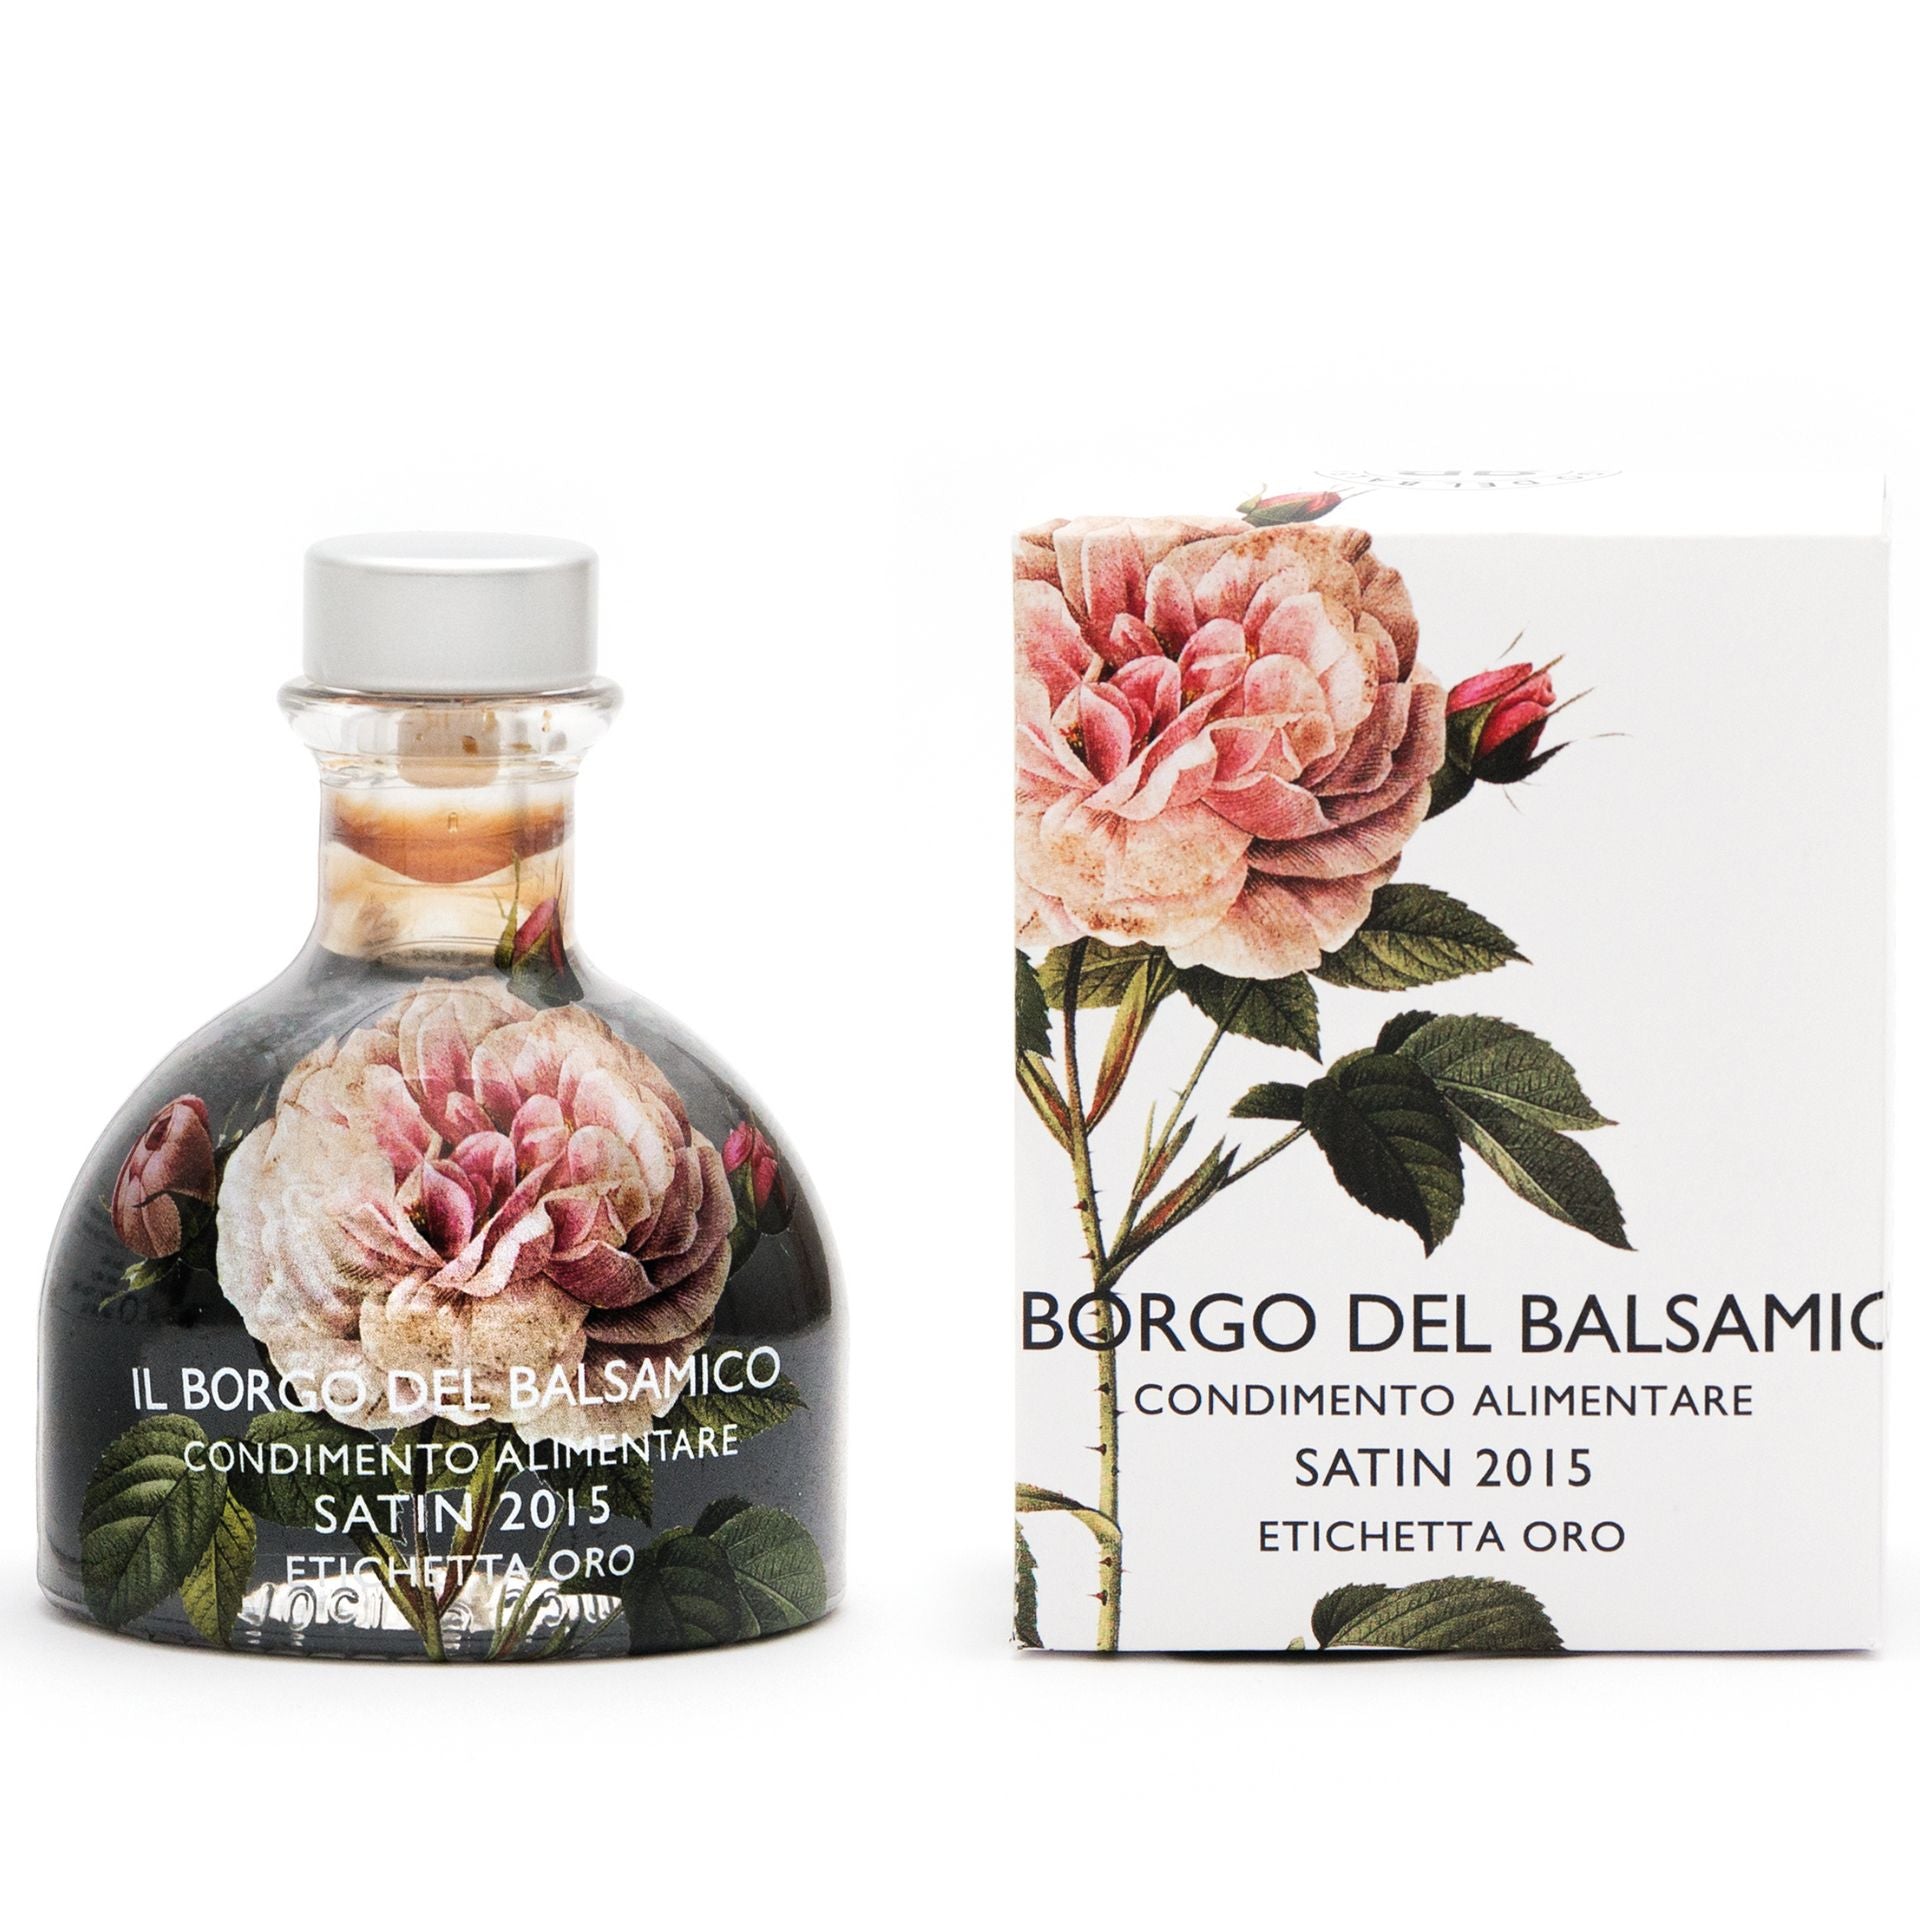 Il Borgo del Balsamico 2015 Limited Edition Satin Balsamic Food Condiment 100ml Feast Italy